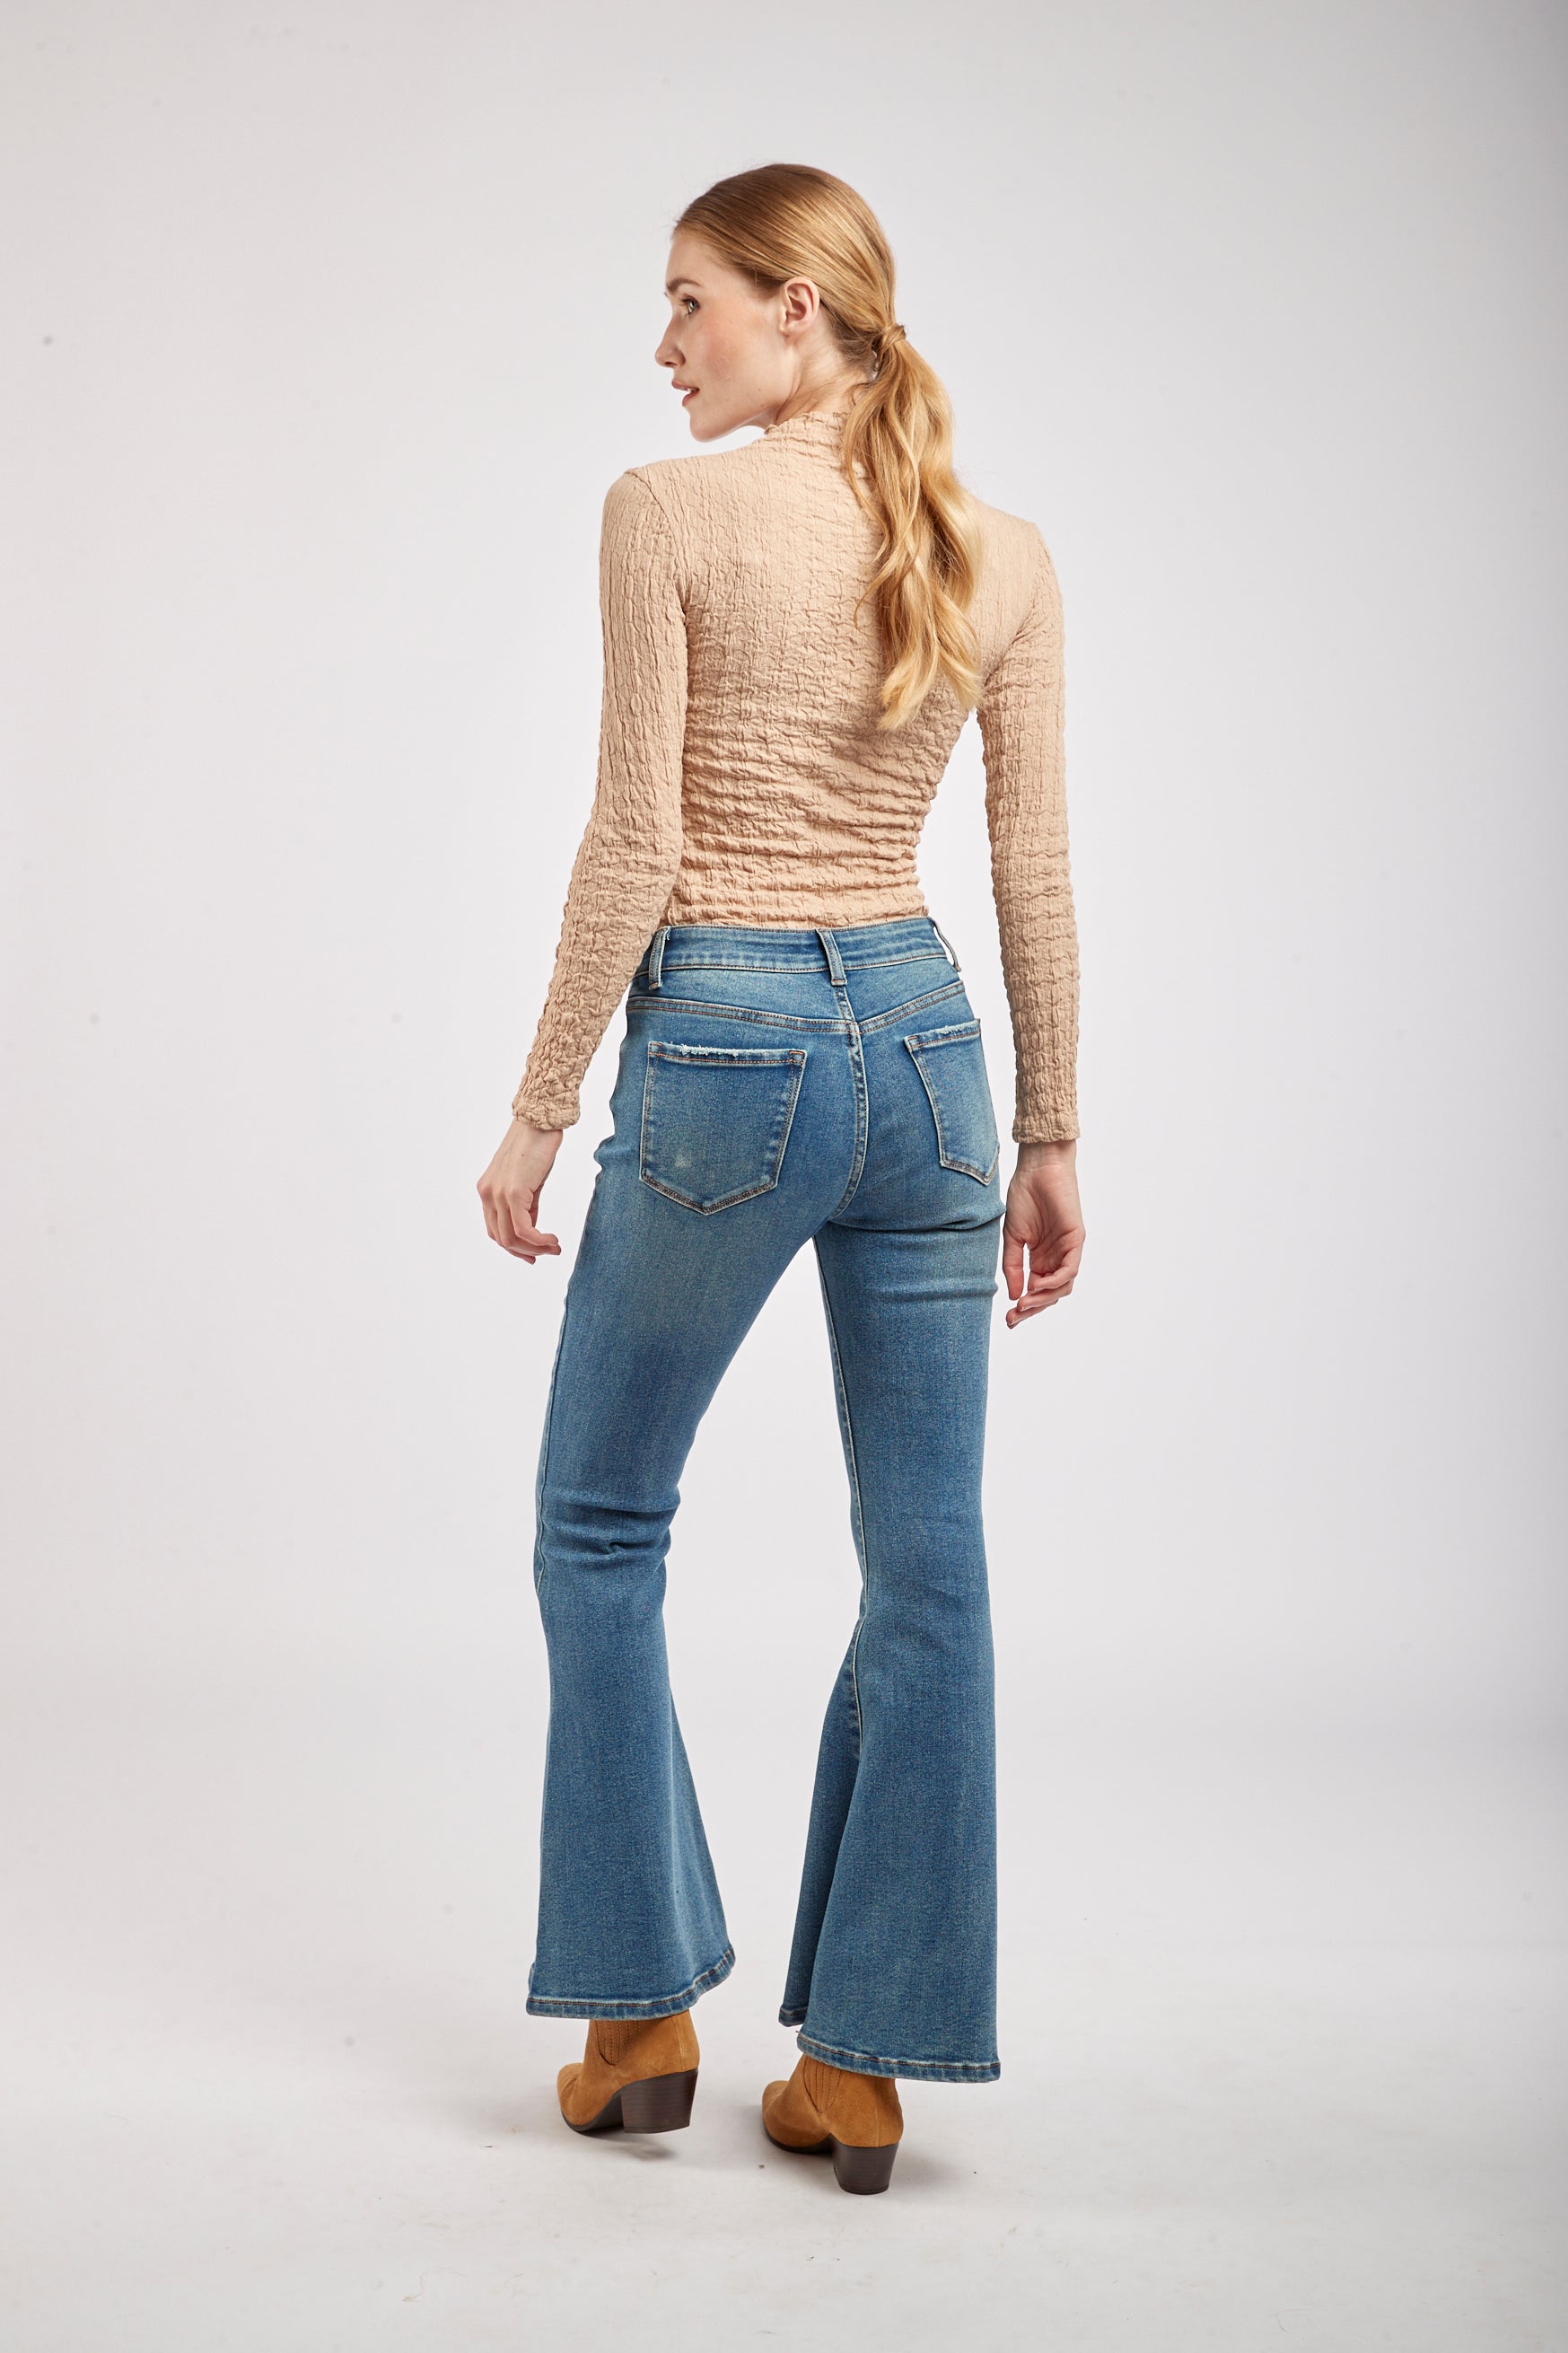 Olifant jeans - yael